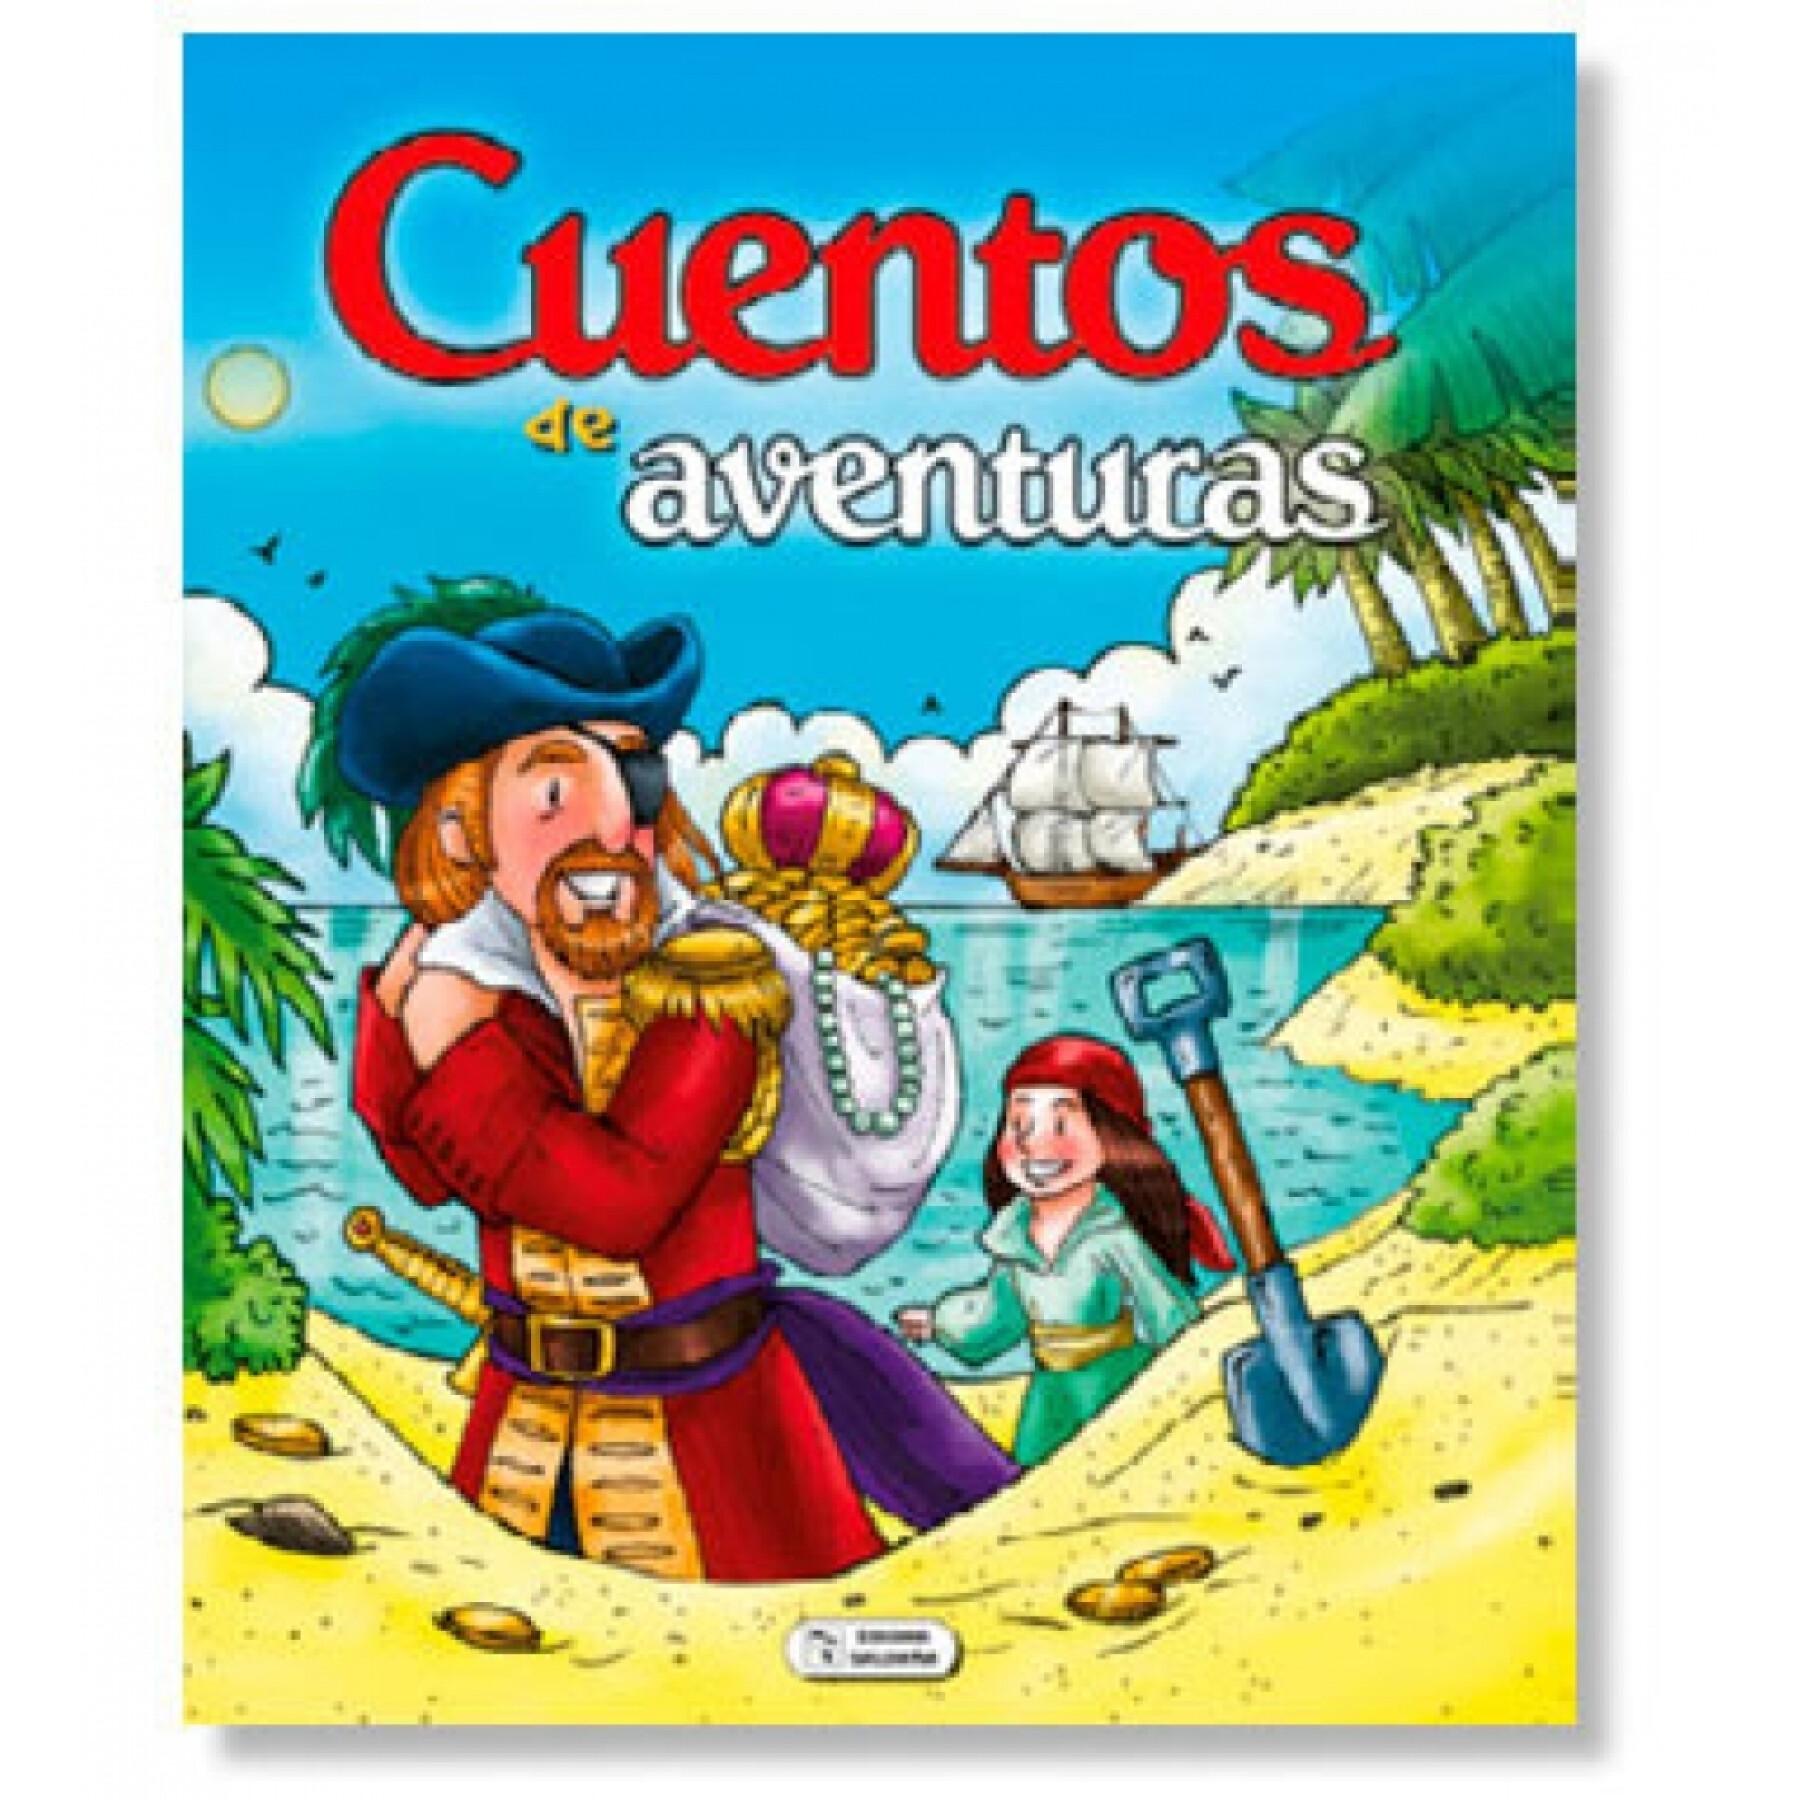 280-sidig äventyrsbok Ediciones Saldaña